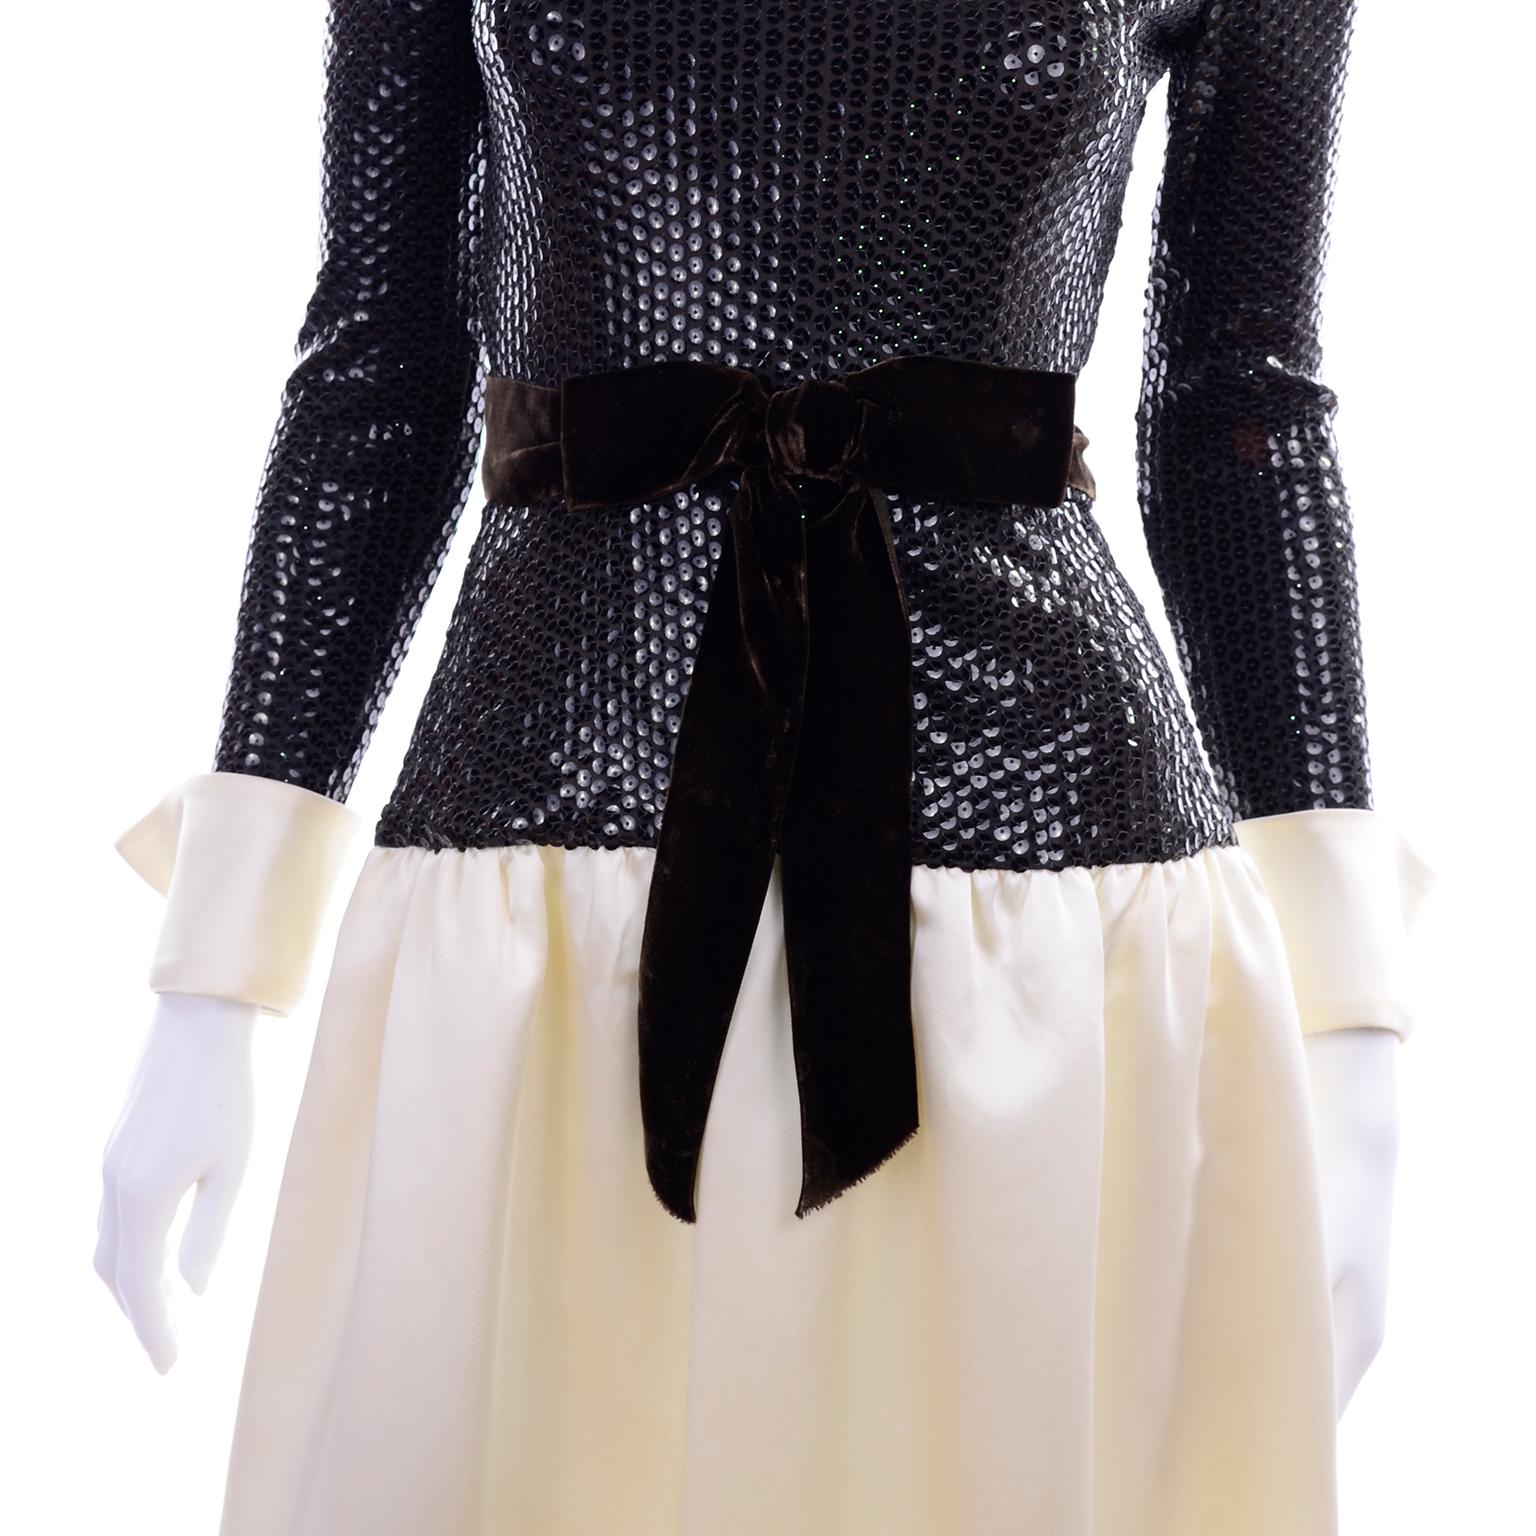 Kiki Hart Vintage Evening Dress Ivory Satin W Brown Sequin Bodice & Velvet Bow 8